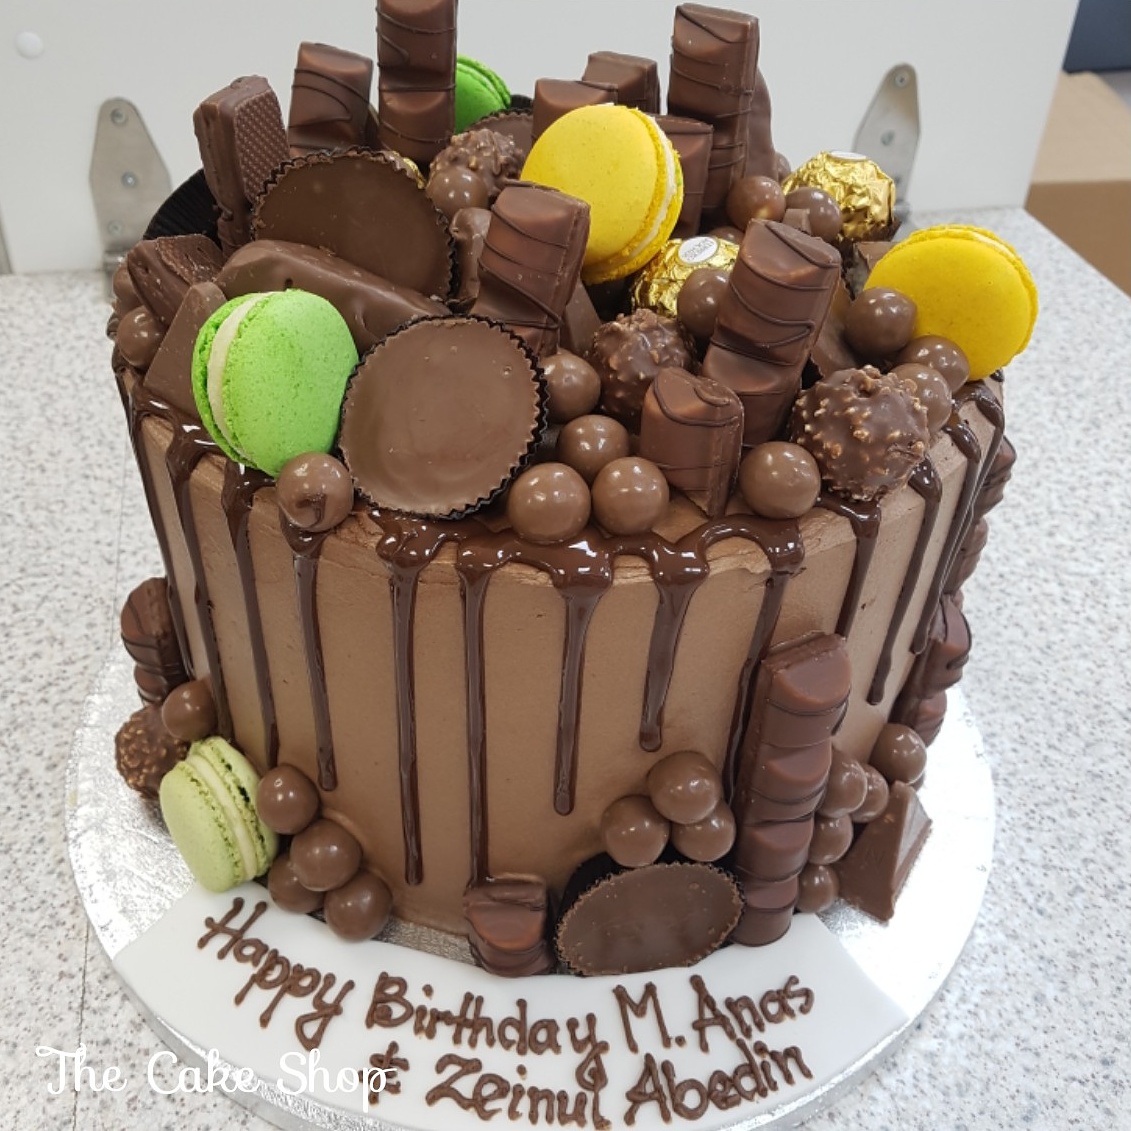 Birthday cakes | Cake Shop Leicester, wedding cakes, eggless cakes ...